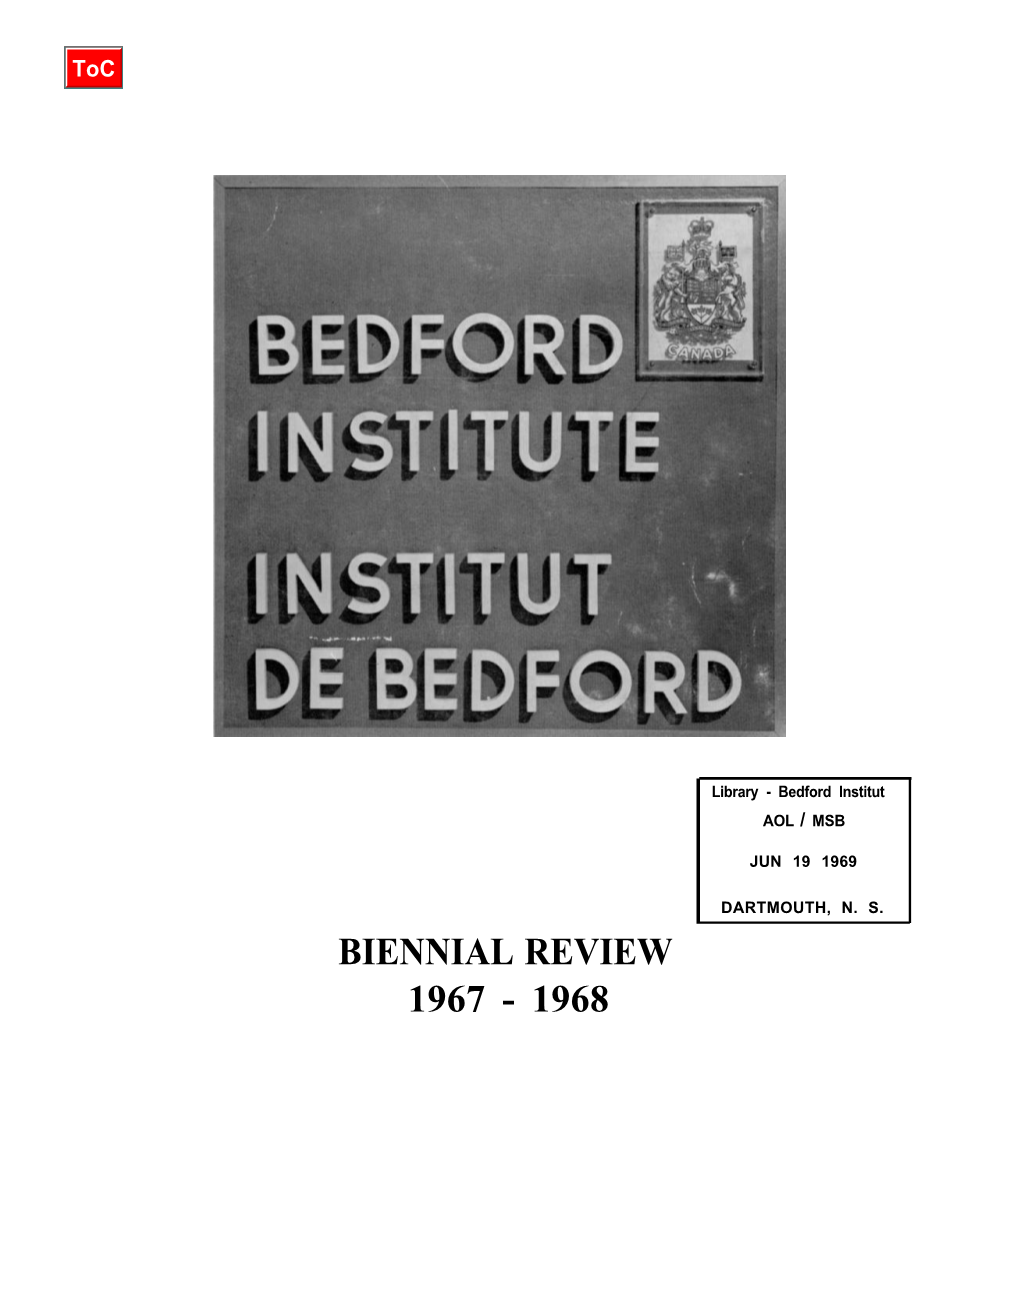 Biennial Review 1967-1968